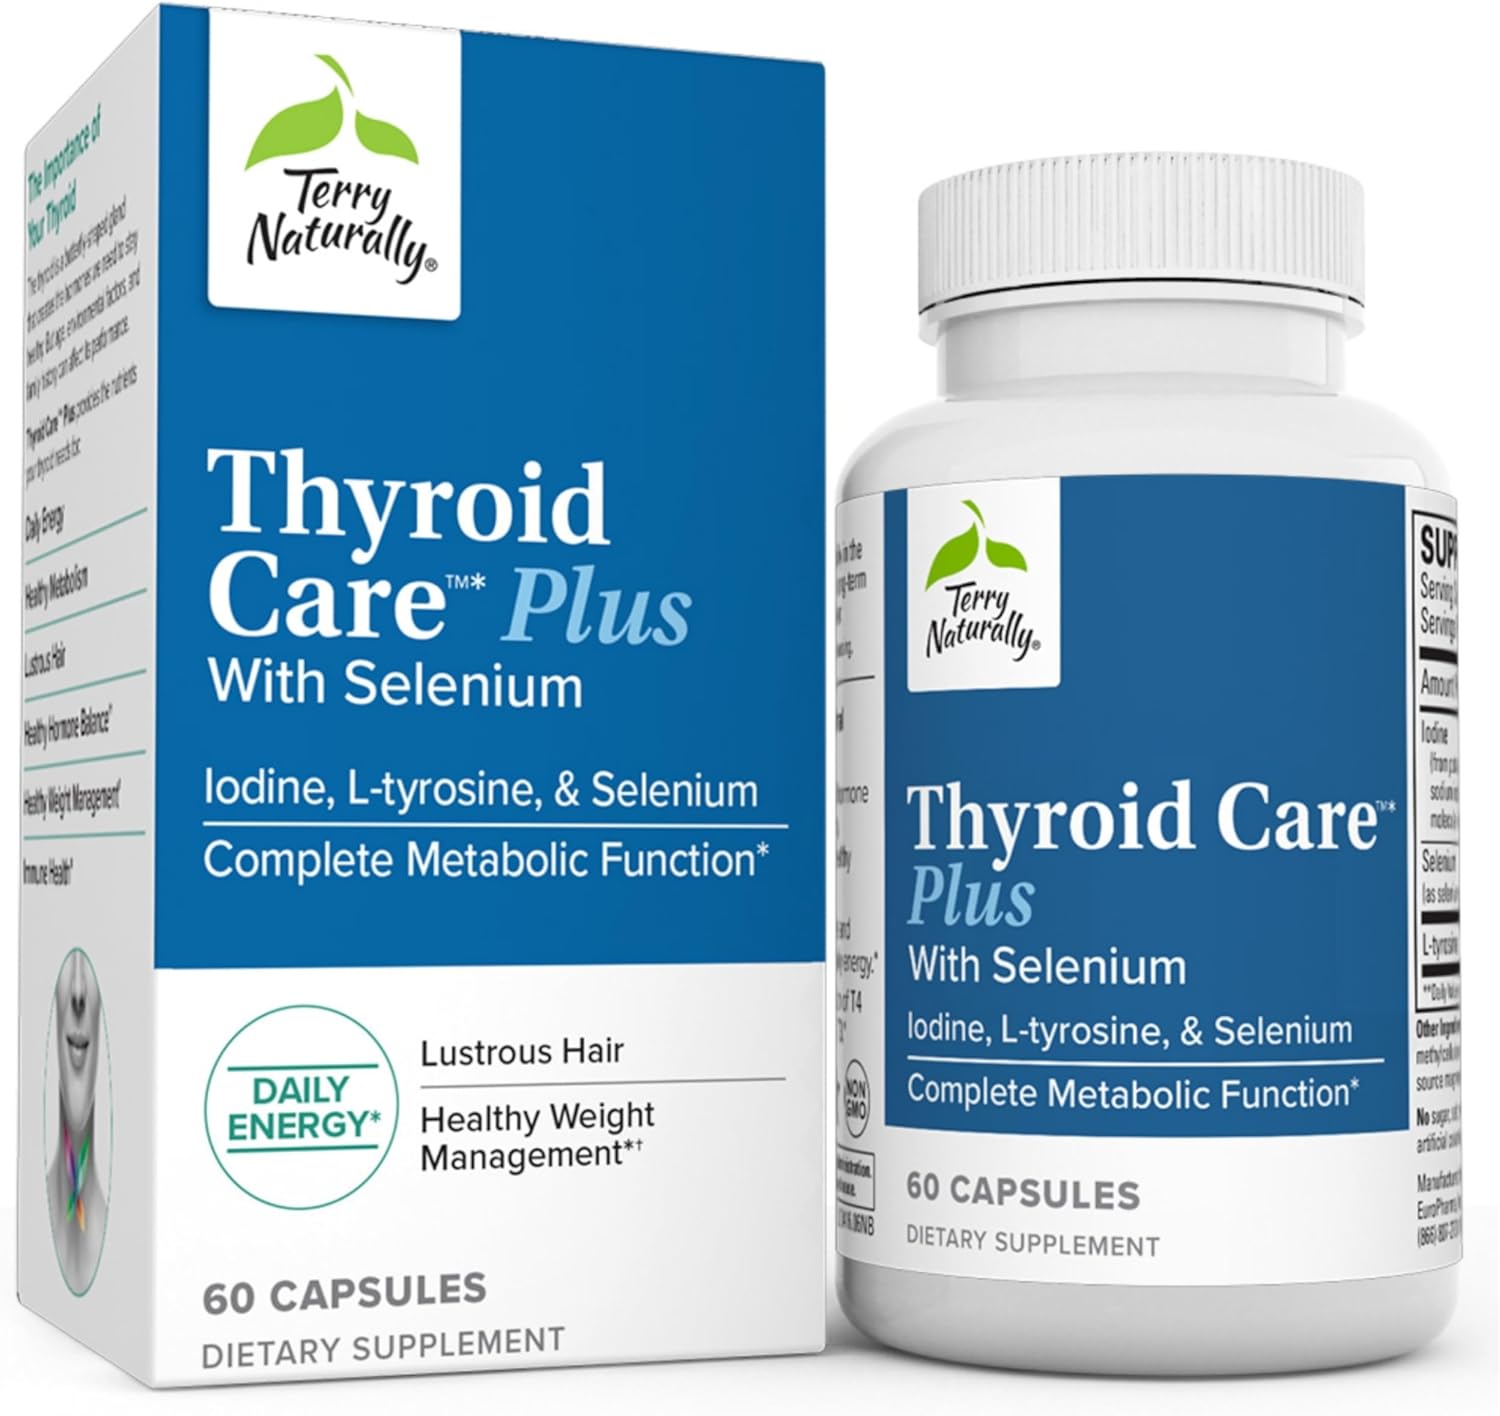 Terry Naturally Thyroid Care Plus - 60 Capsules - with Selenium, Iodine & L-Tyrosine - 30 Servings